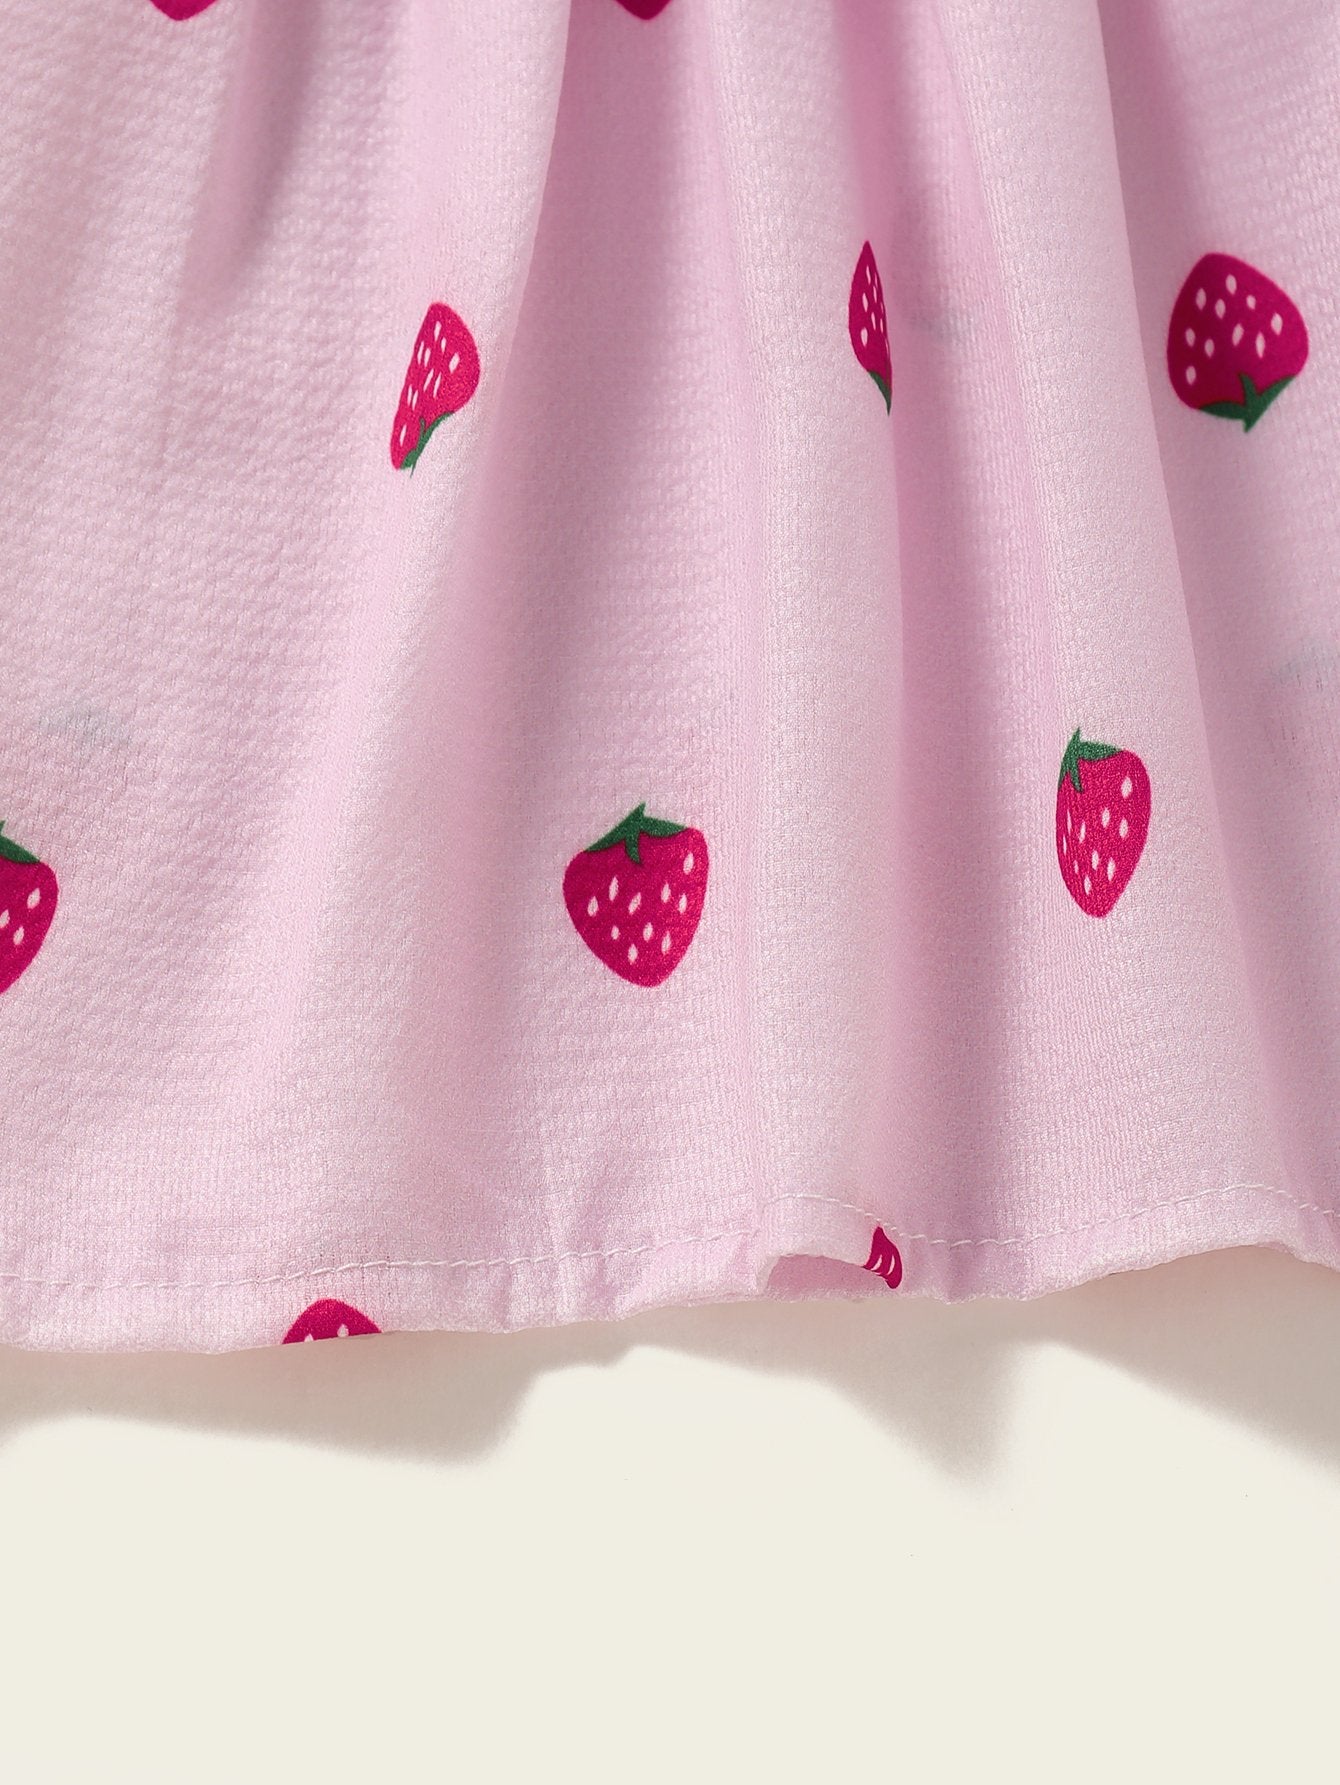 Girls Strawberry Polka Dot Printed Sleeveless Sling Dress Kids Dress Wholesale